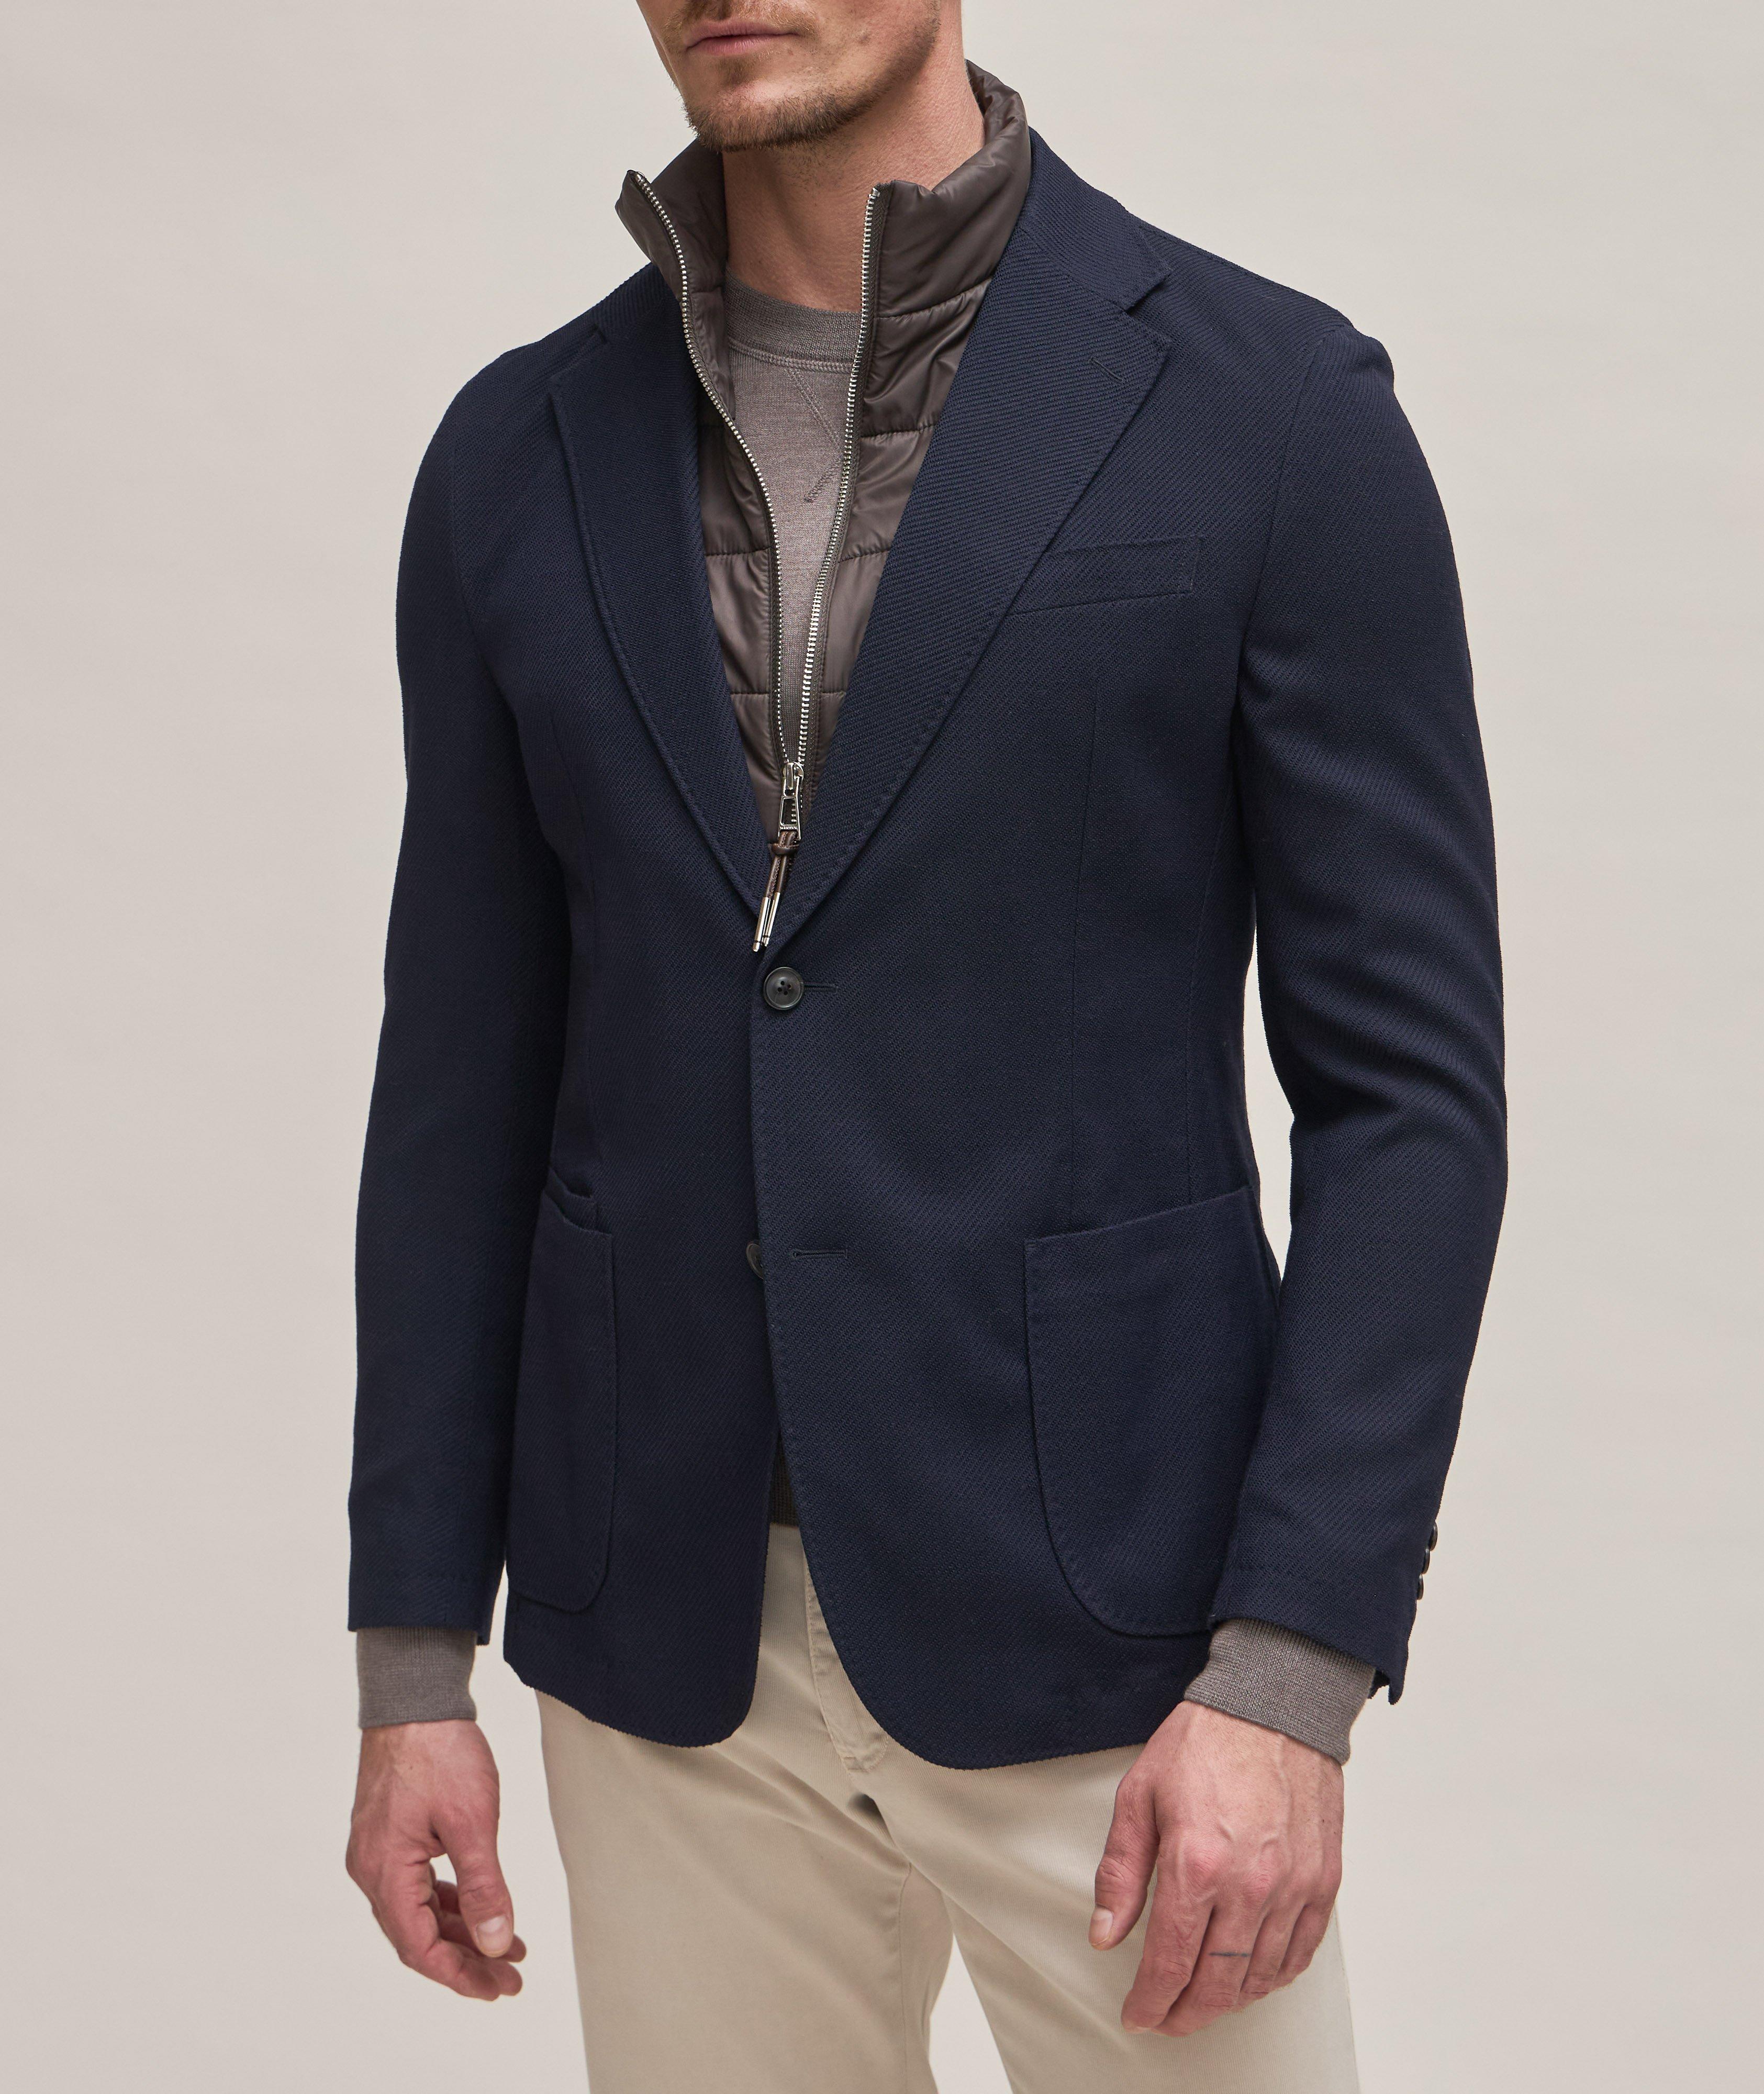 Triest Textured Stretch Wool-Cotton Blend Sport Jacket image 1